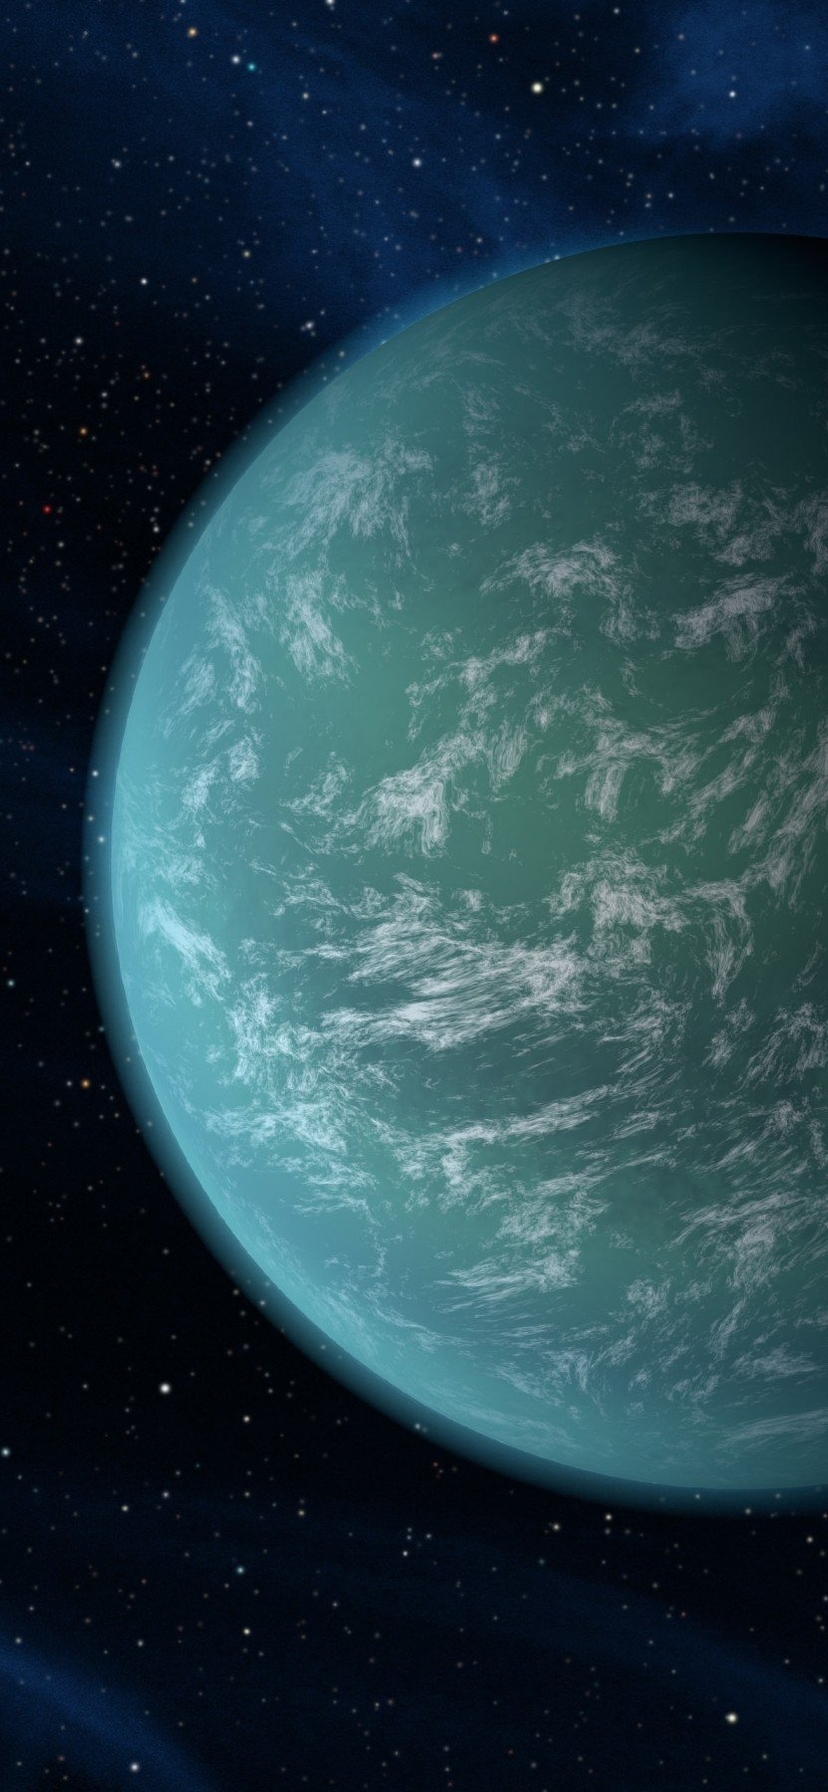 Image: Kepler-22 b, exoplanet, space, atmosphere